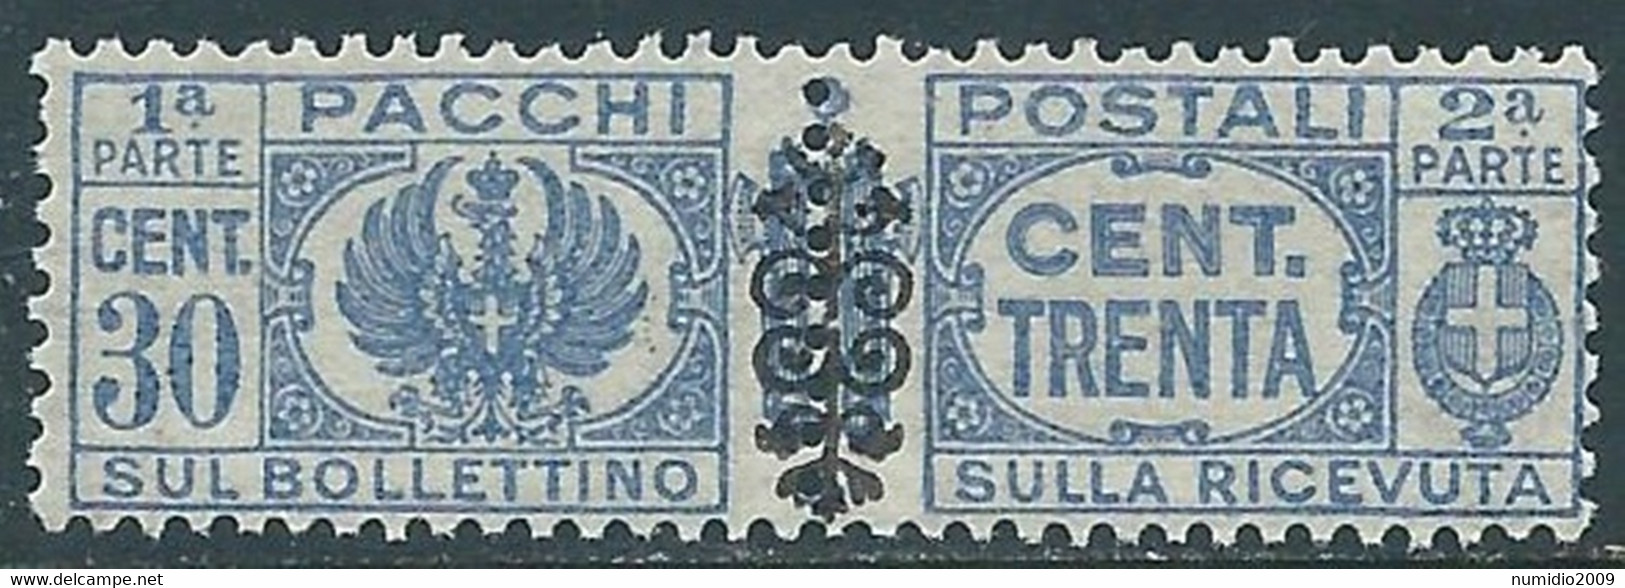 1945 LUOGOTENENZA PACCHI POSTALI 30 CENT MNH ** - RB14-2 - Paketmarken